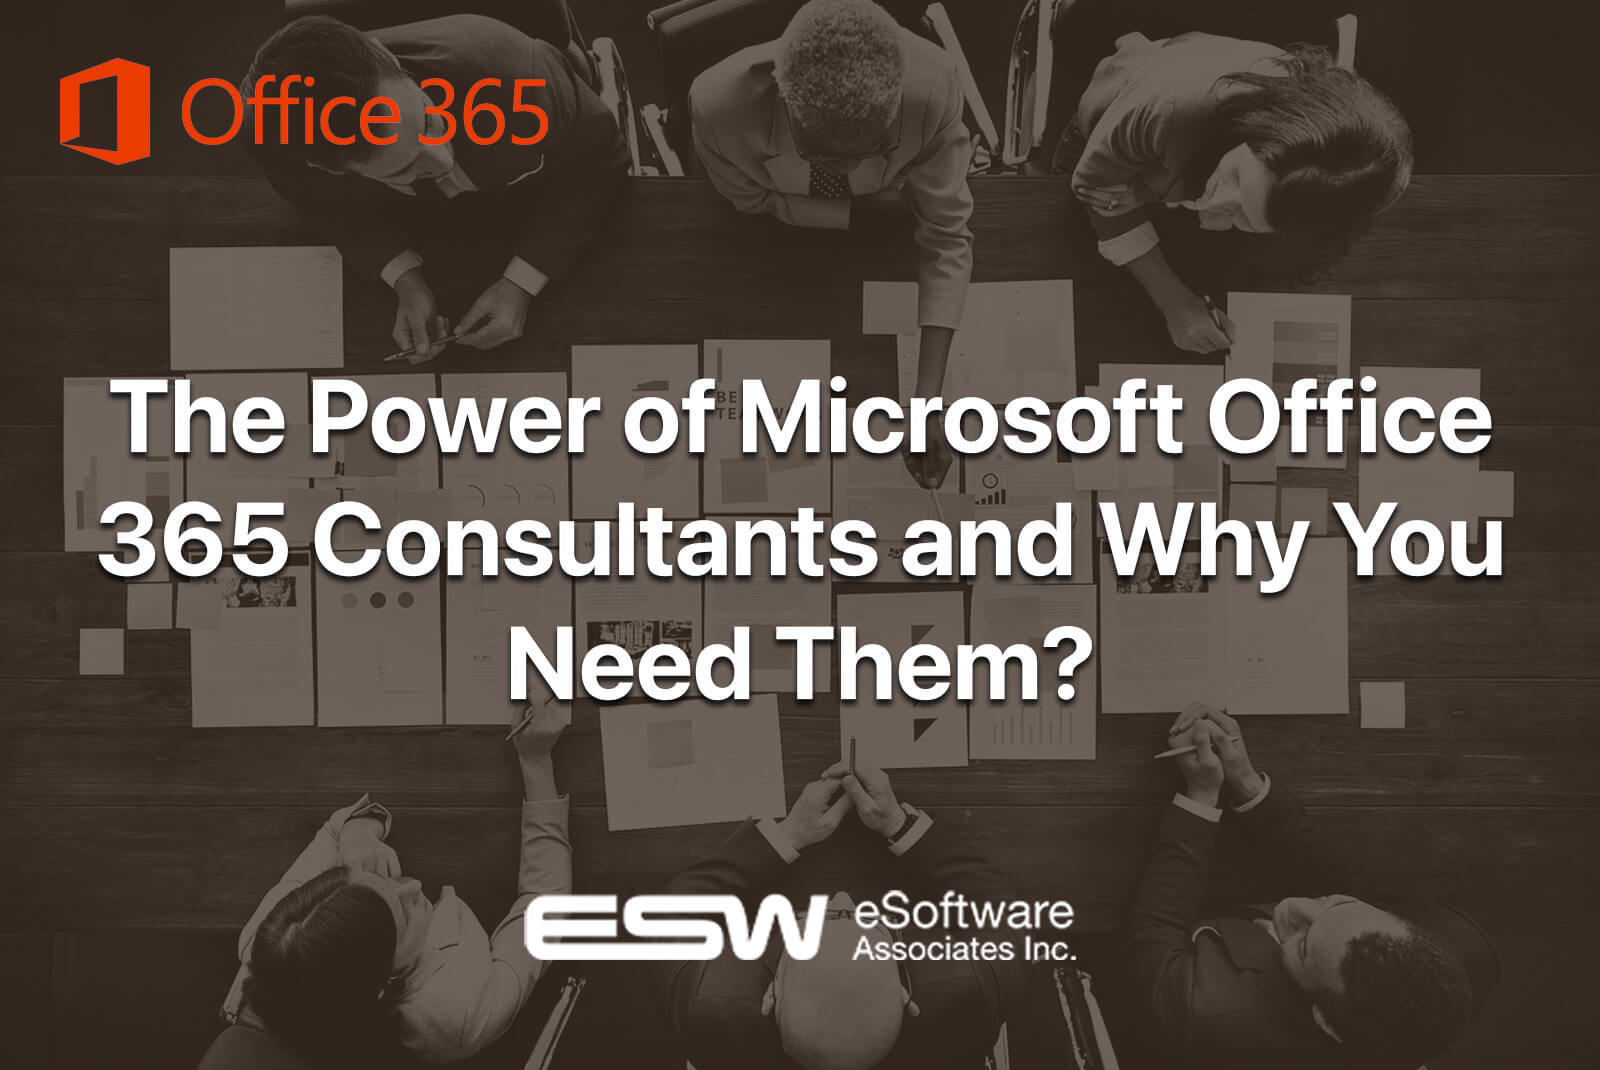 ESWCompany's Microsoft Office 365 Consultants